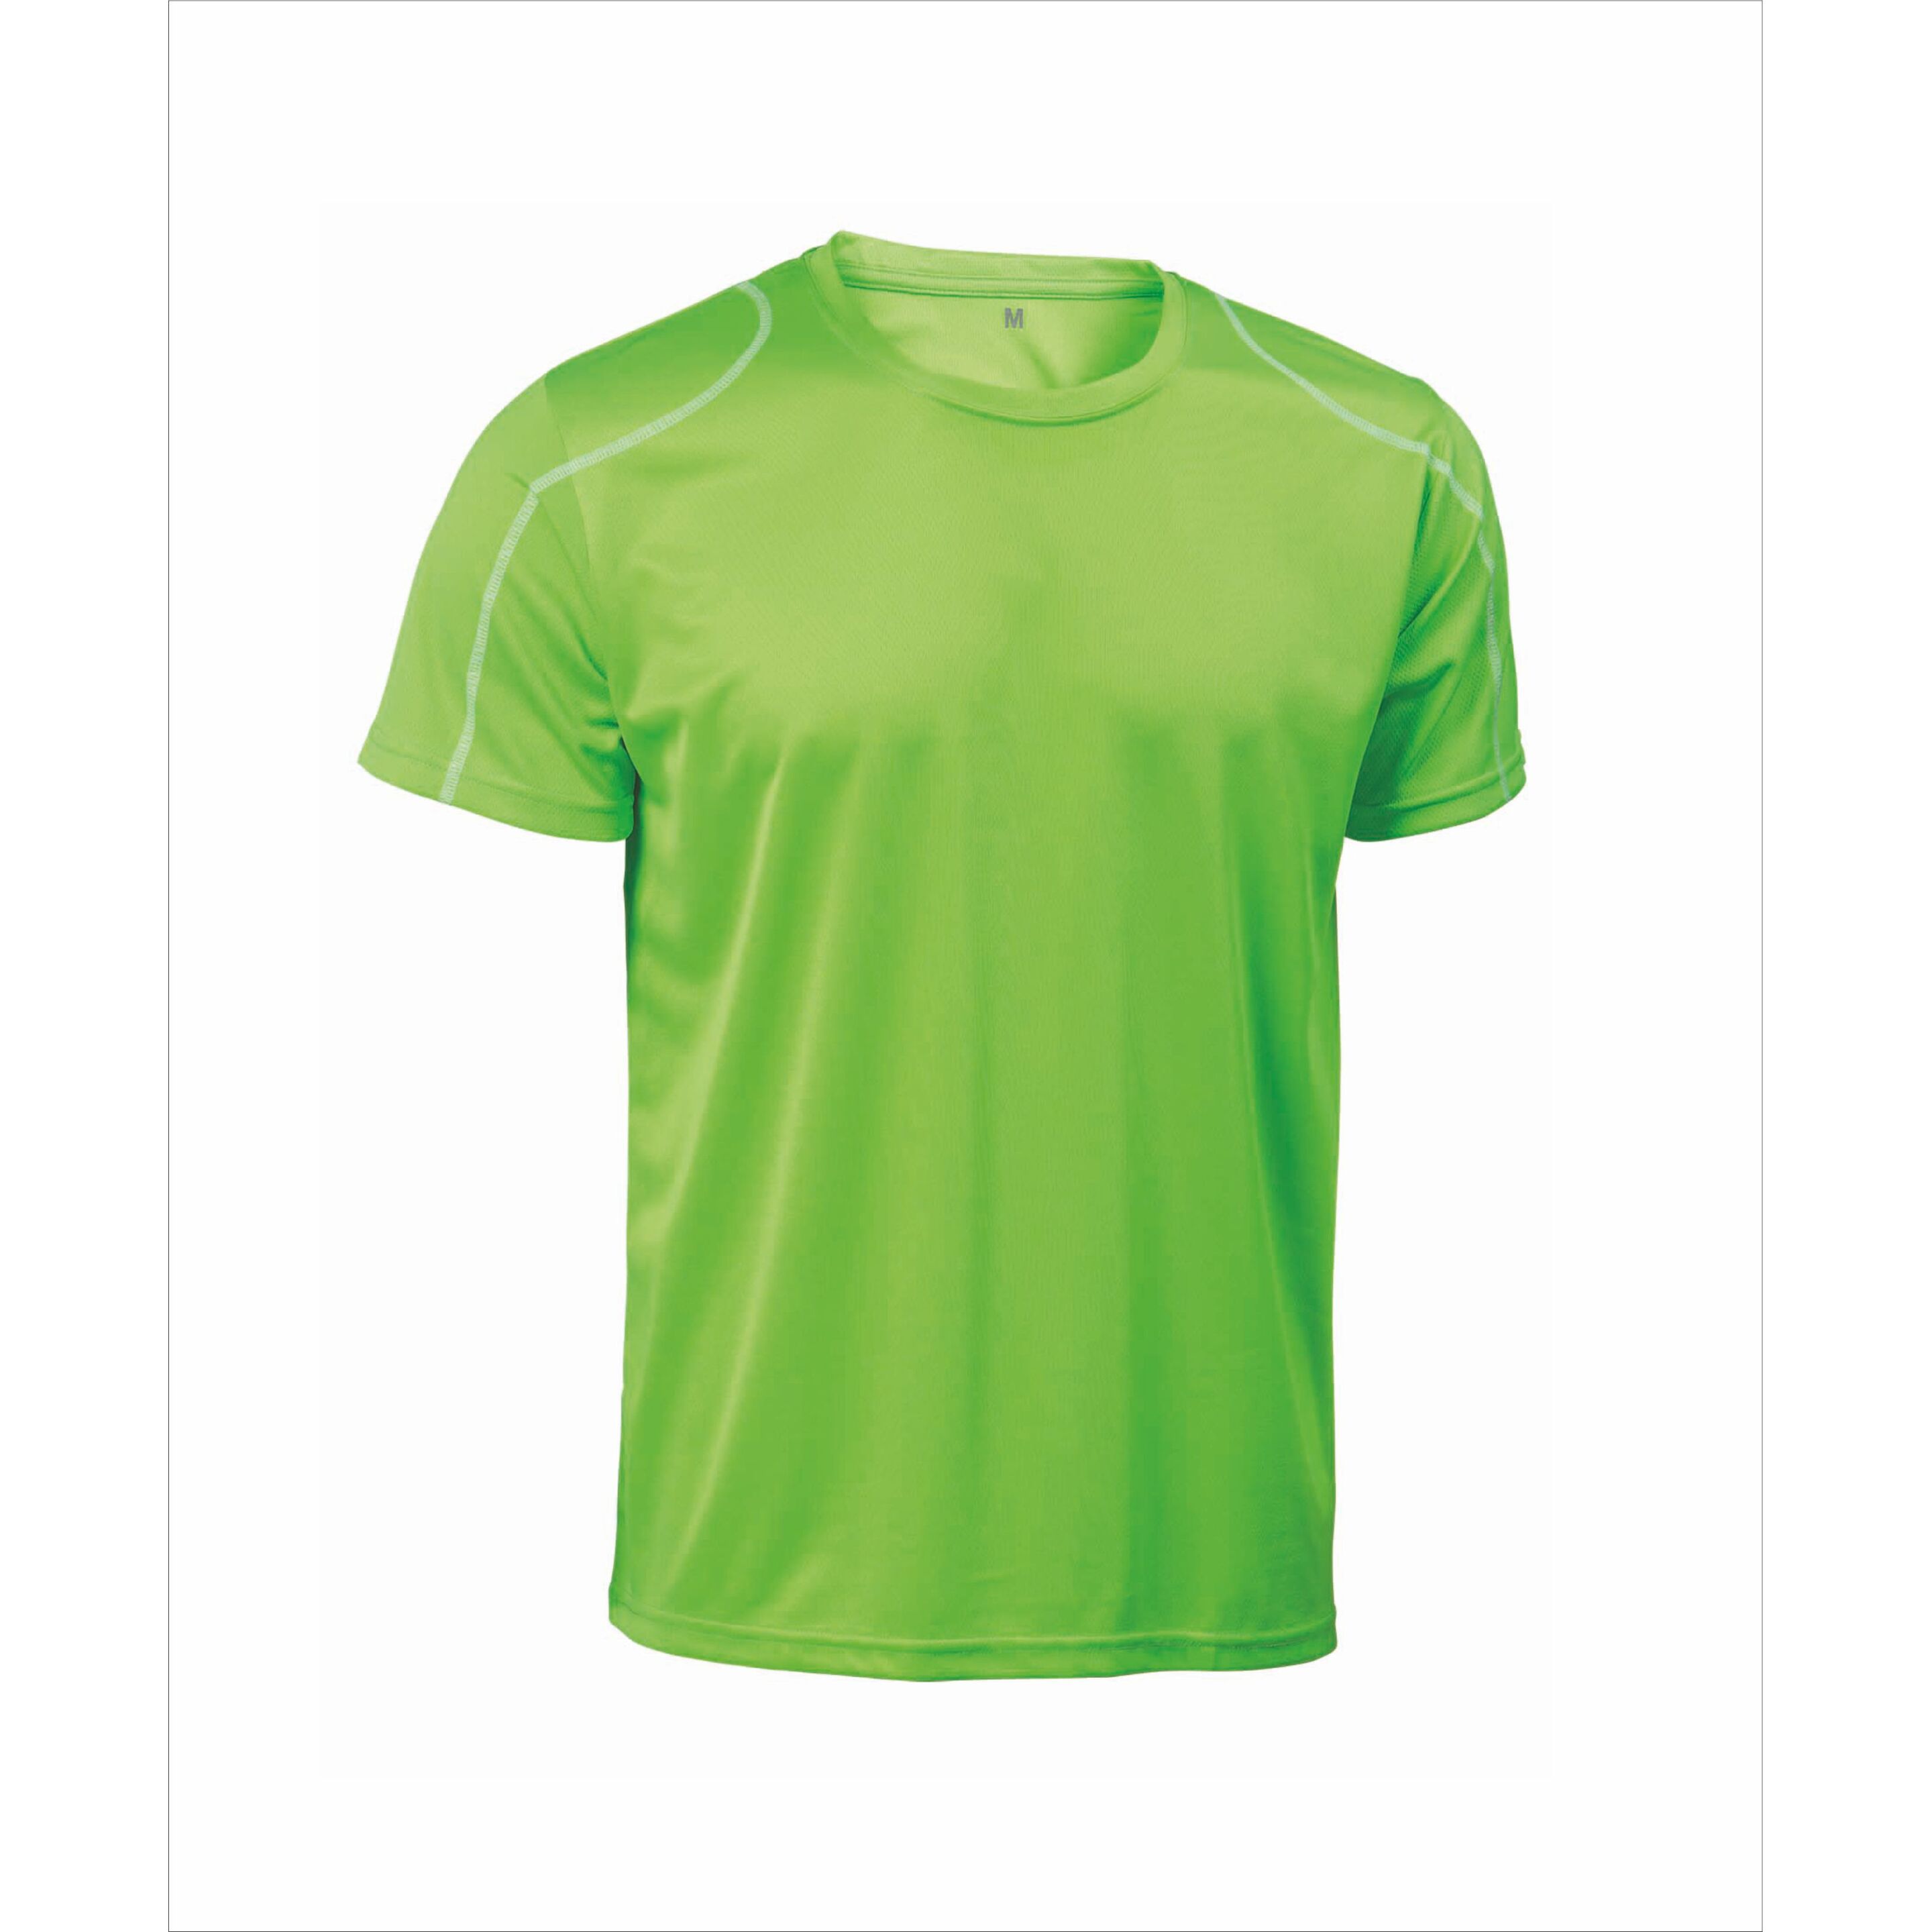 Camiseta Running Modelo Río Asioka - verde_fluor - Camiseta Correr Manga Corta  MKP